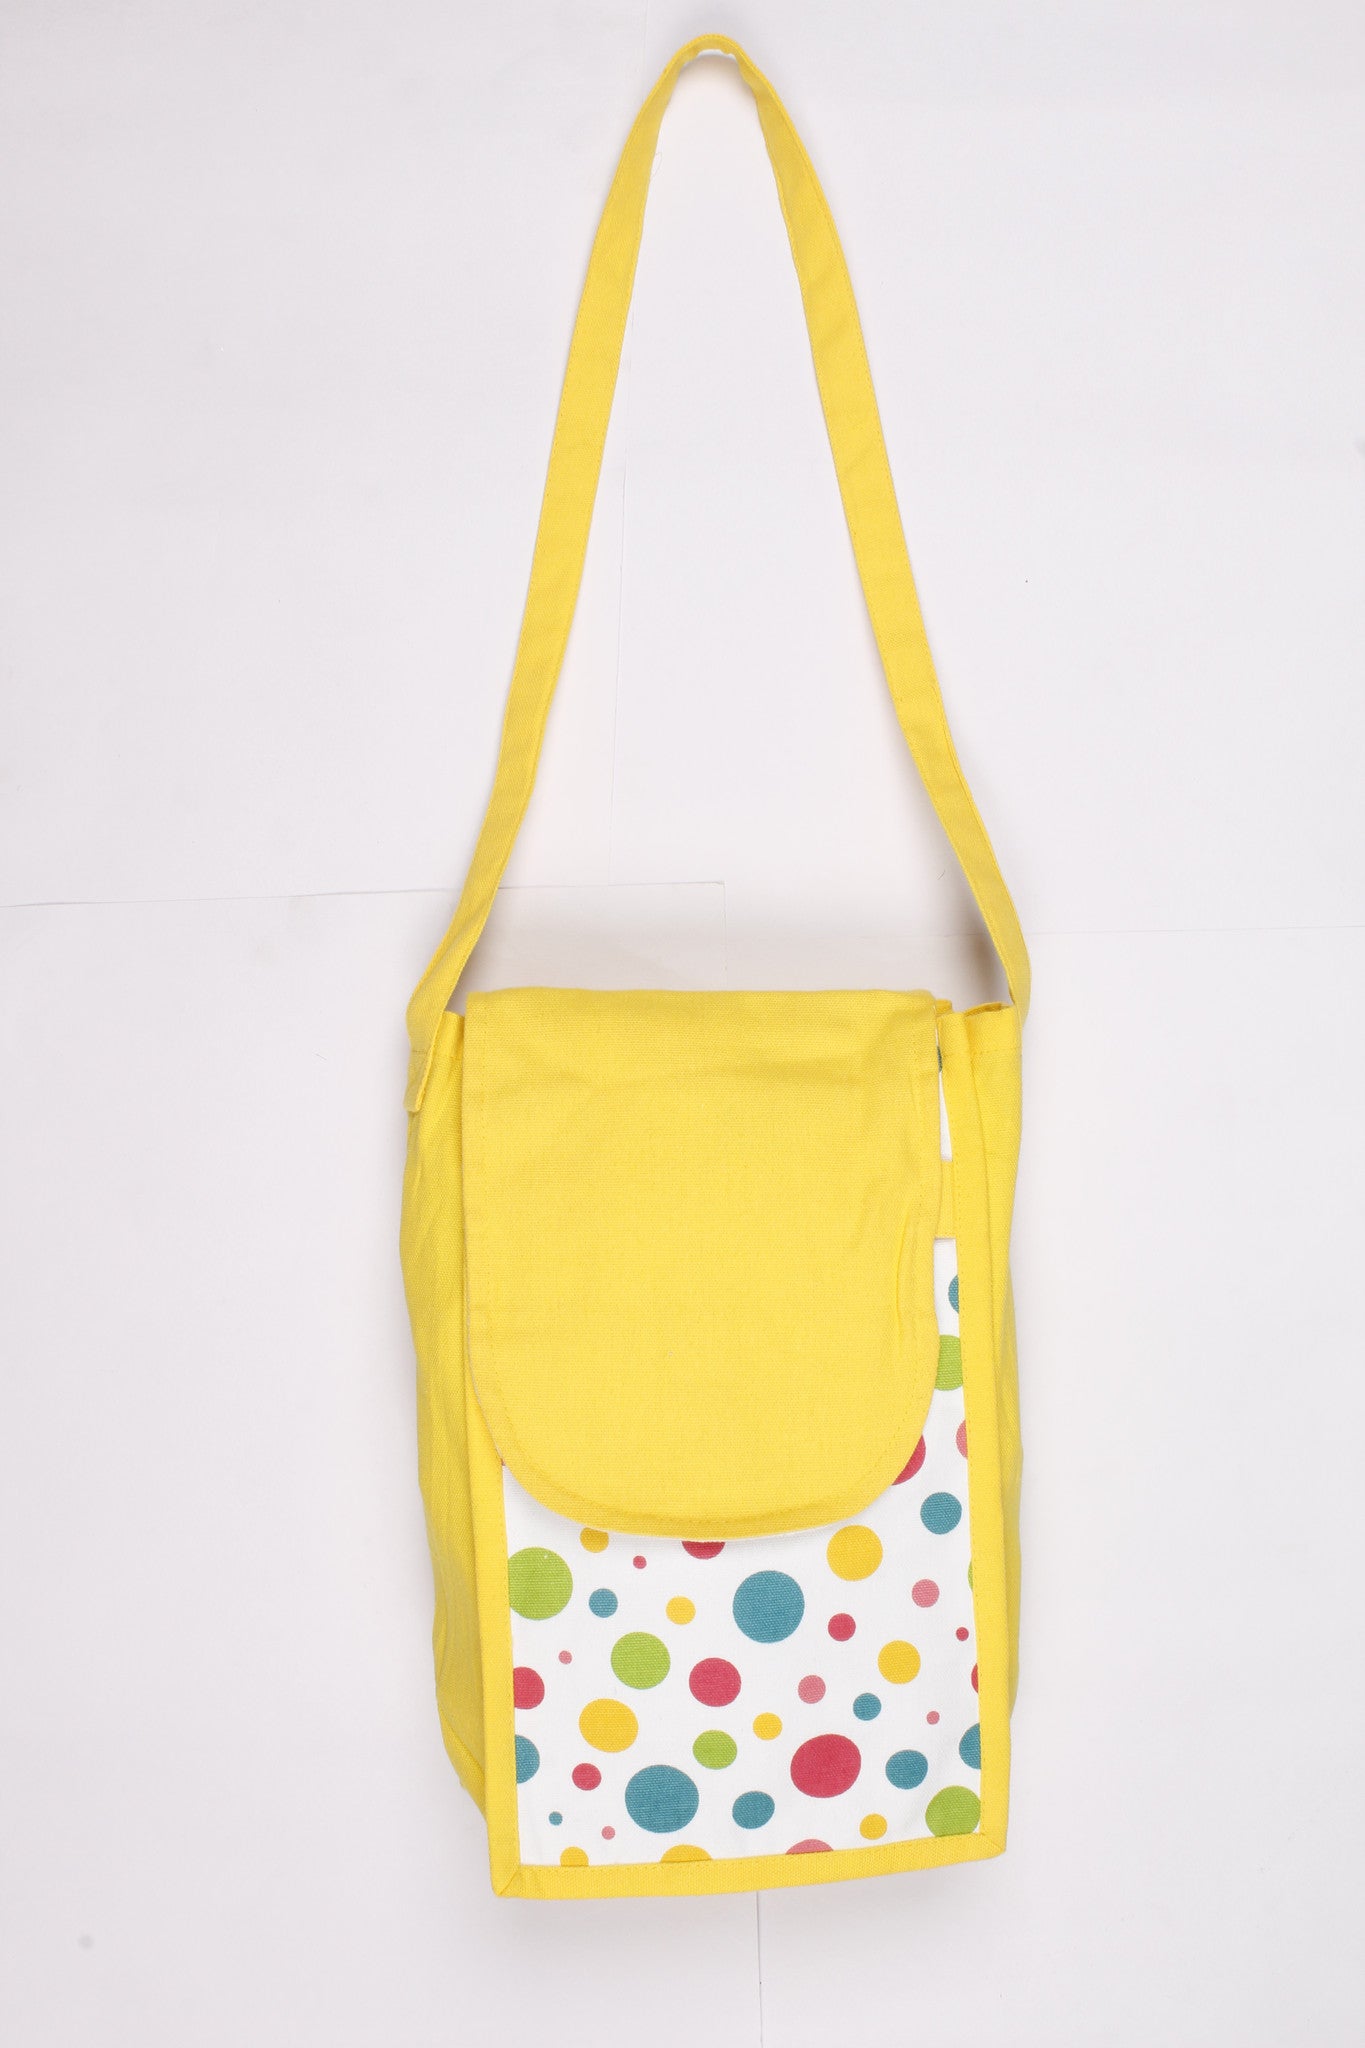 Fancy Bag Long Handle - Multi Polka Dot